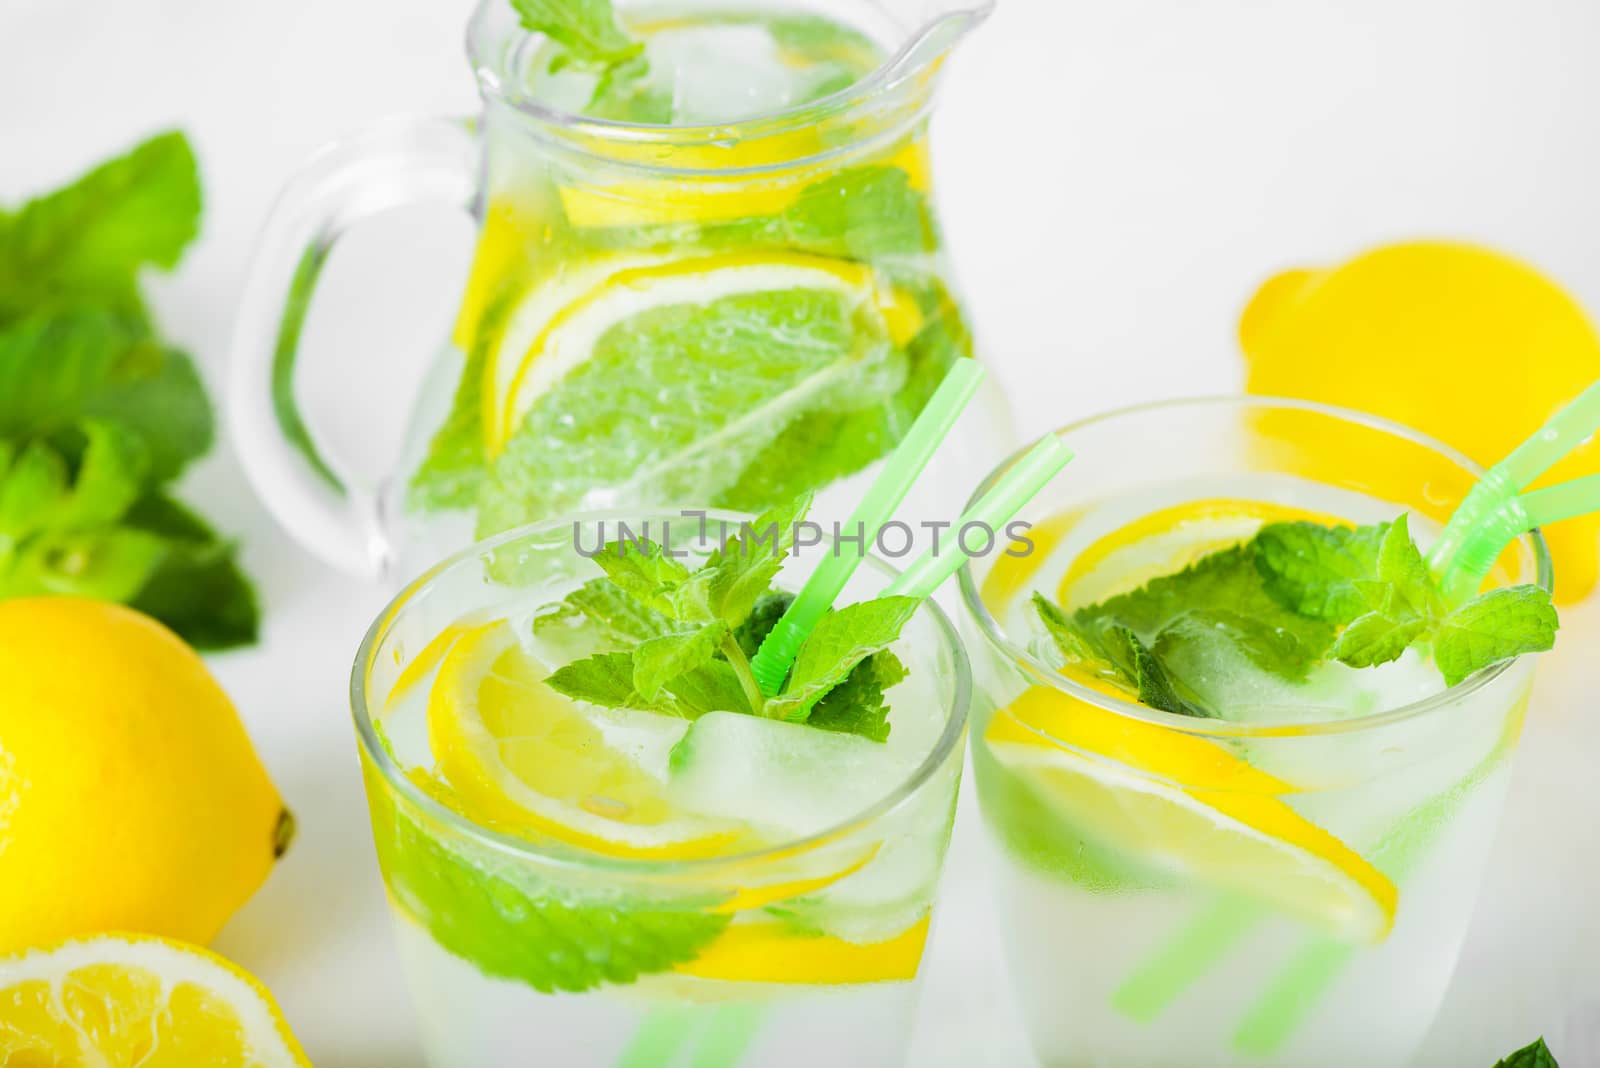 Delicious refreshing lemonade by iprachenko